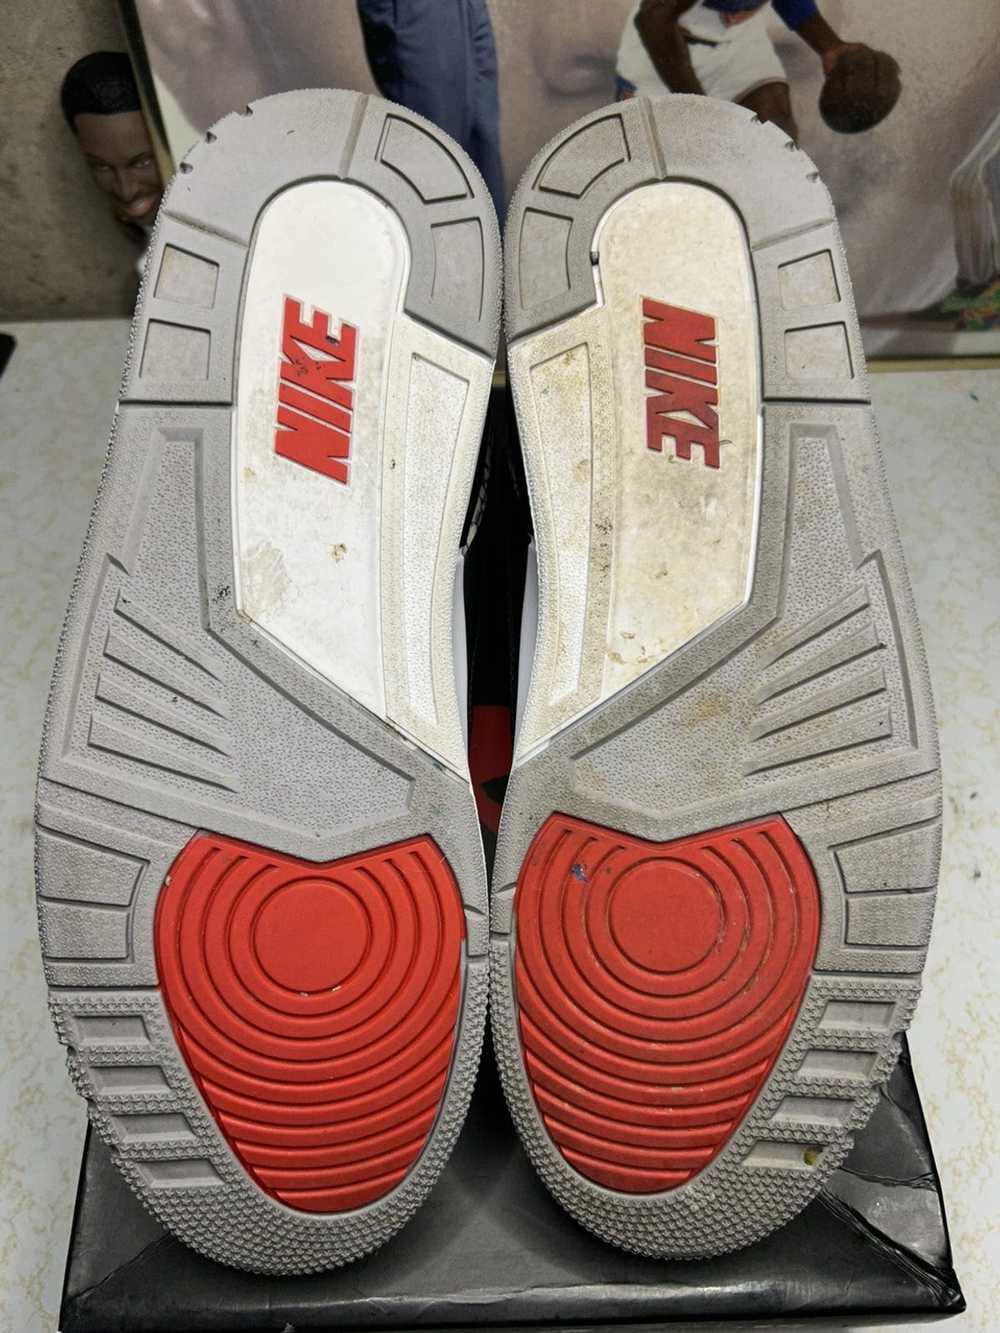 Jordan Brand Jordan Retro 3 “Black Cement” - image 4